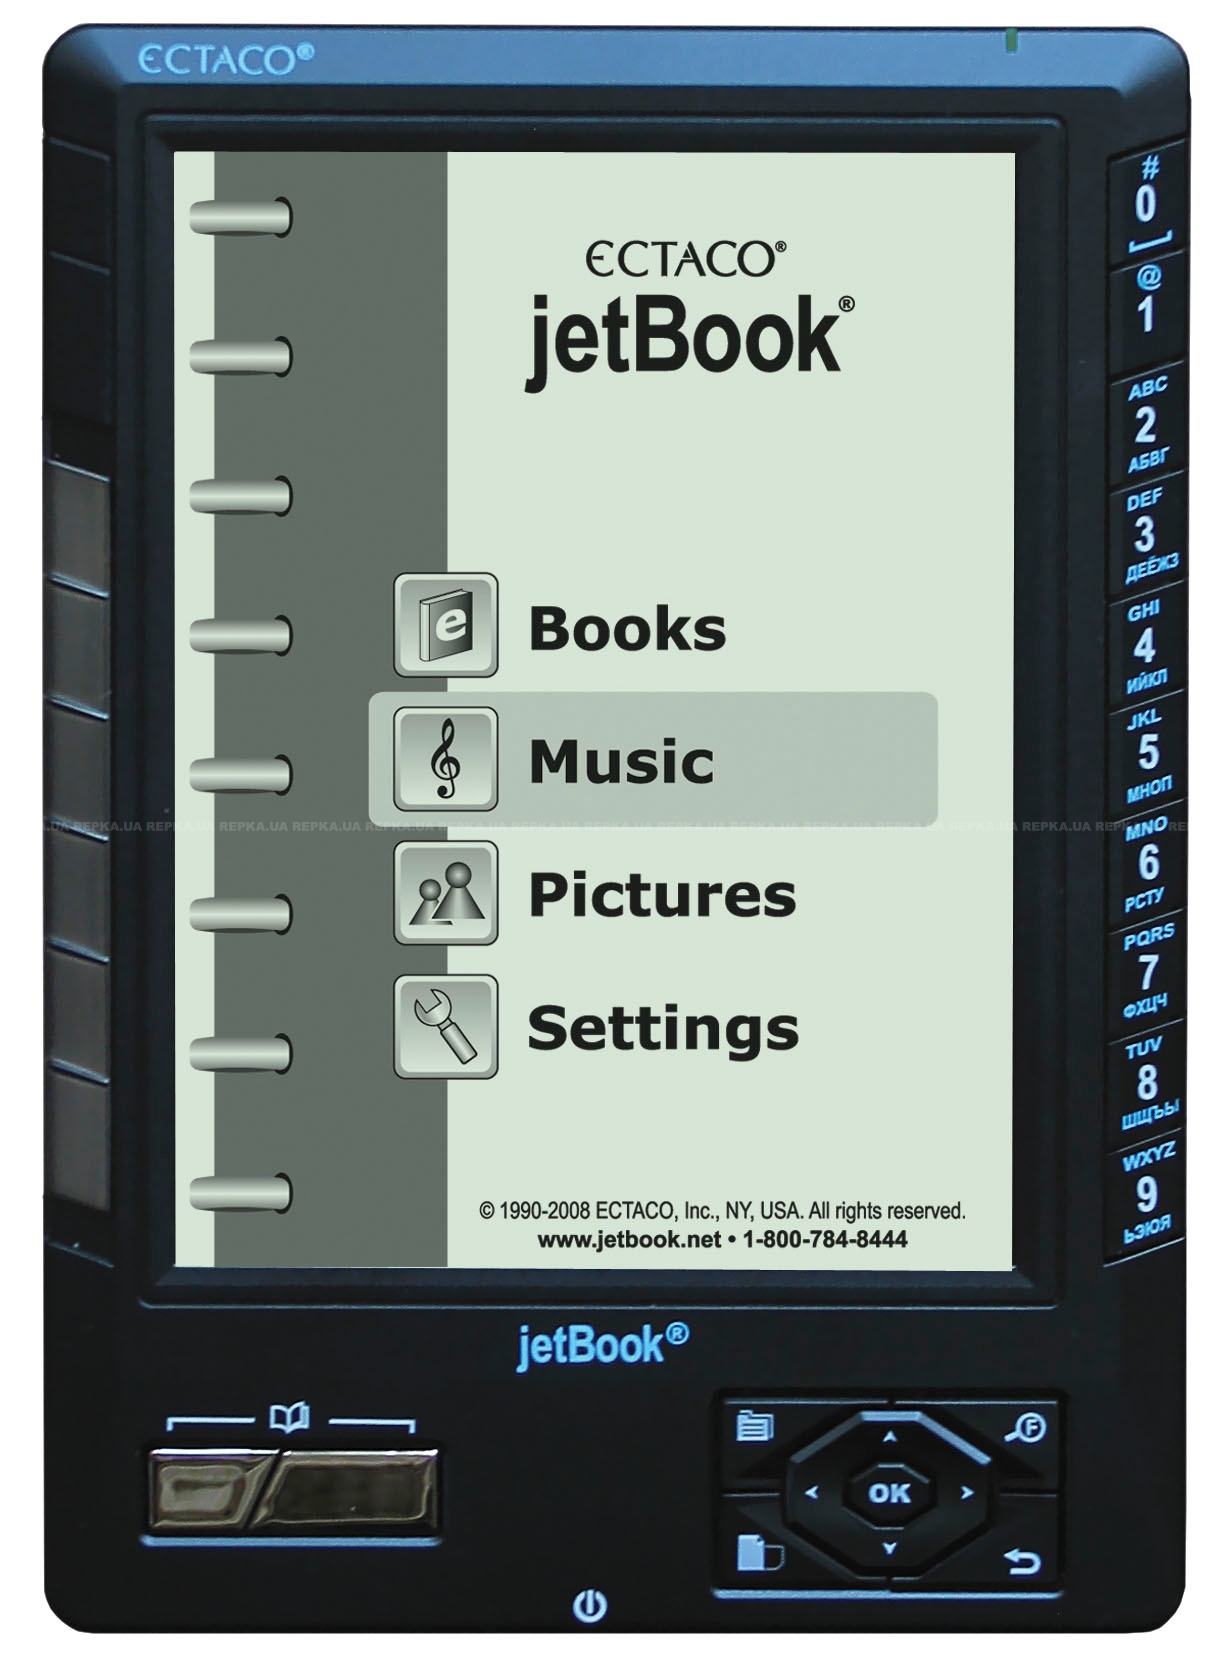 ECTACO jetBook Lite